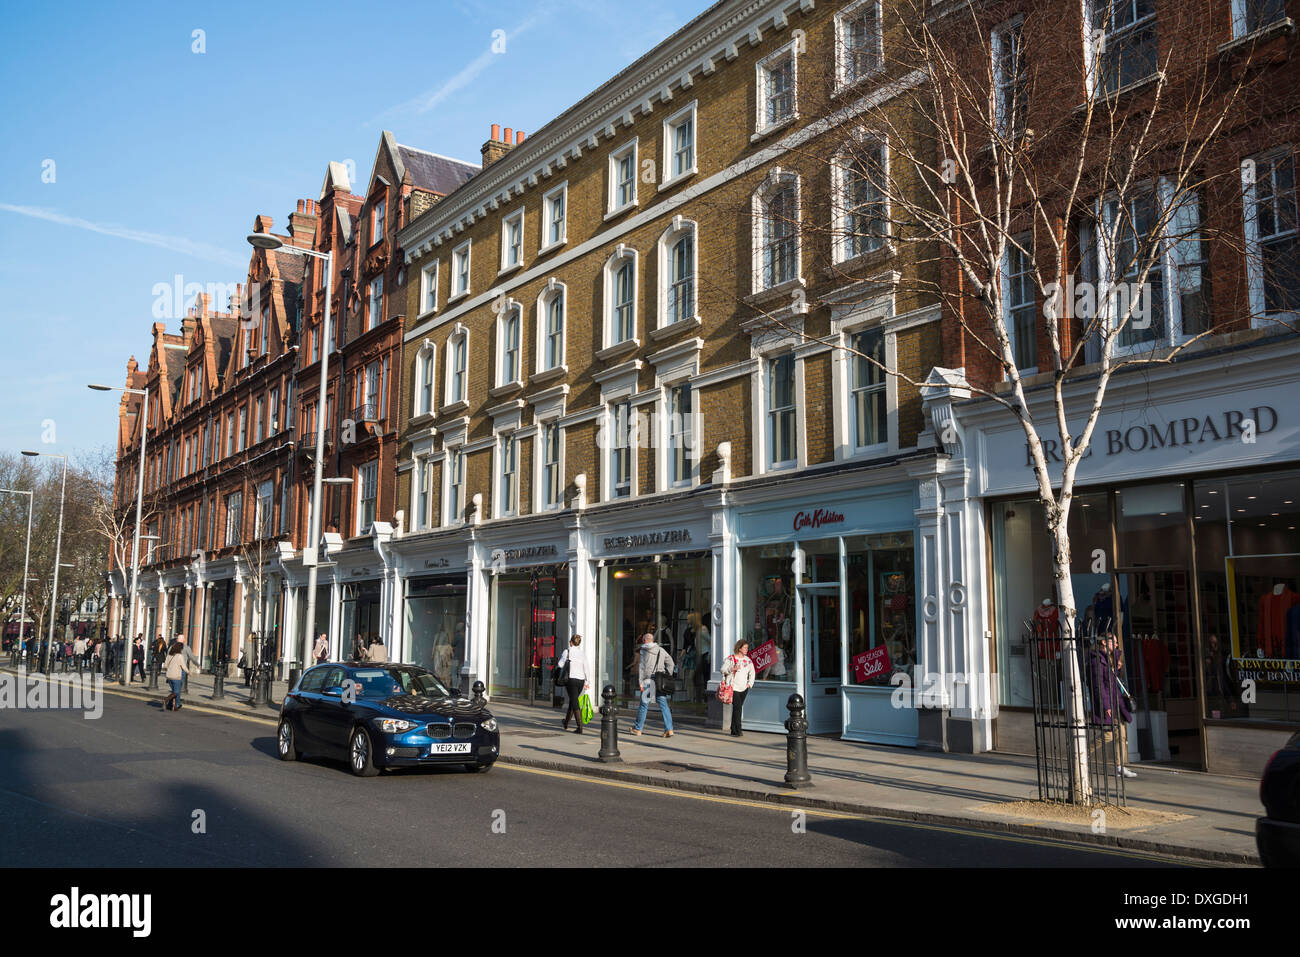 King's Road, Chelsea, London, UK Banque D'Images